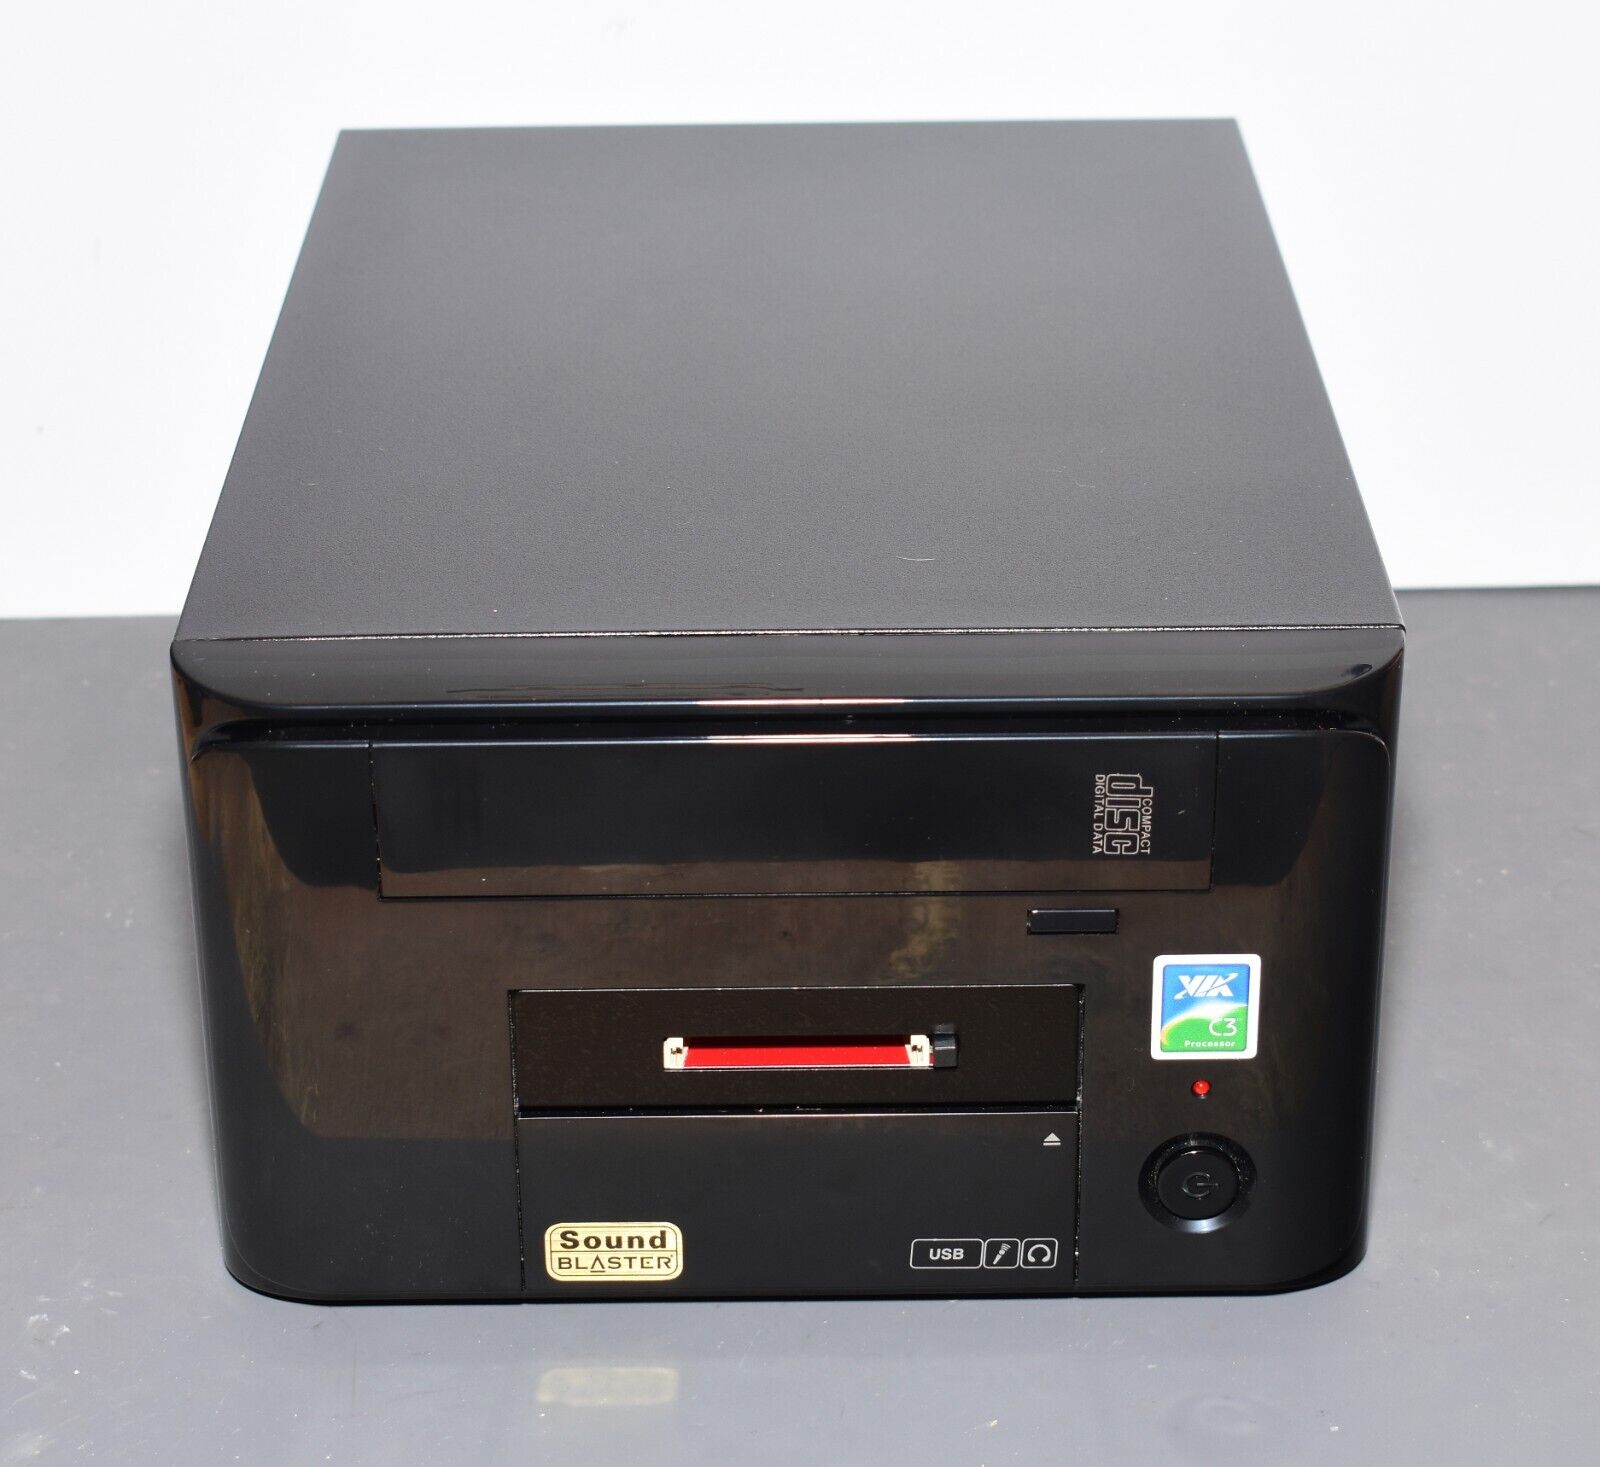 New Retro Windows 98 Mini ITX Computer PC / SSD / CD ROM / SoundBlaster / Floppy